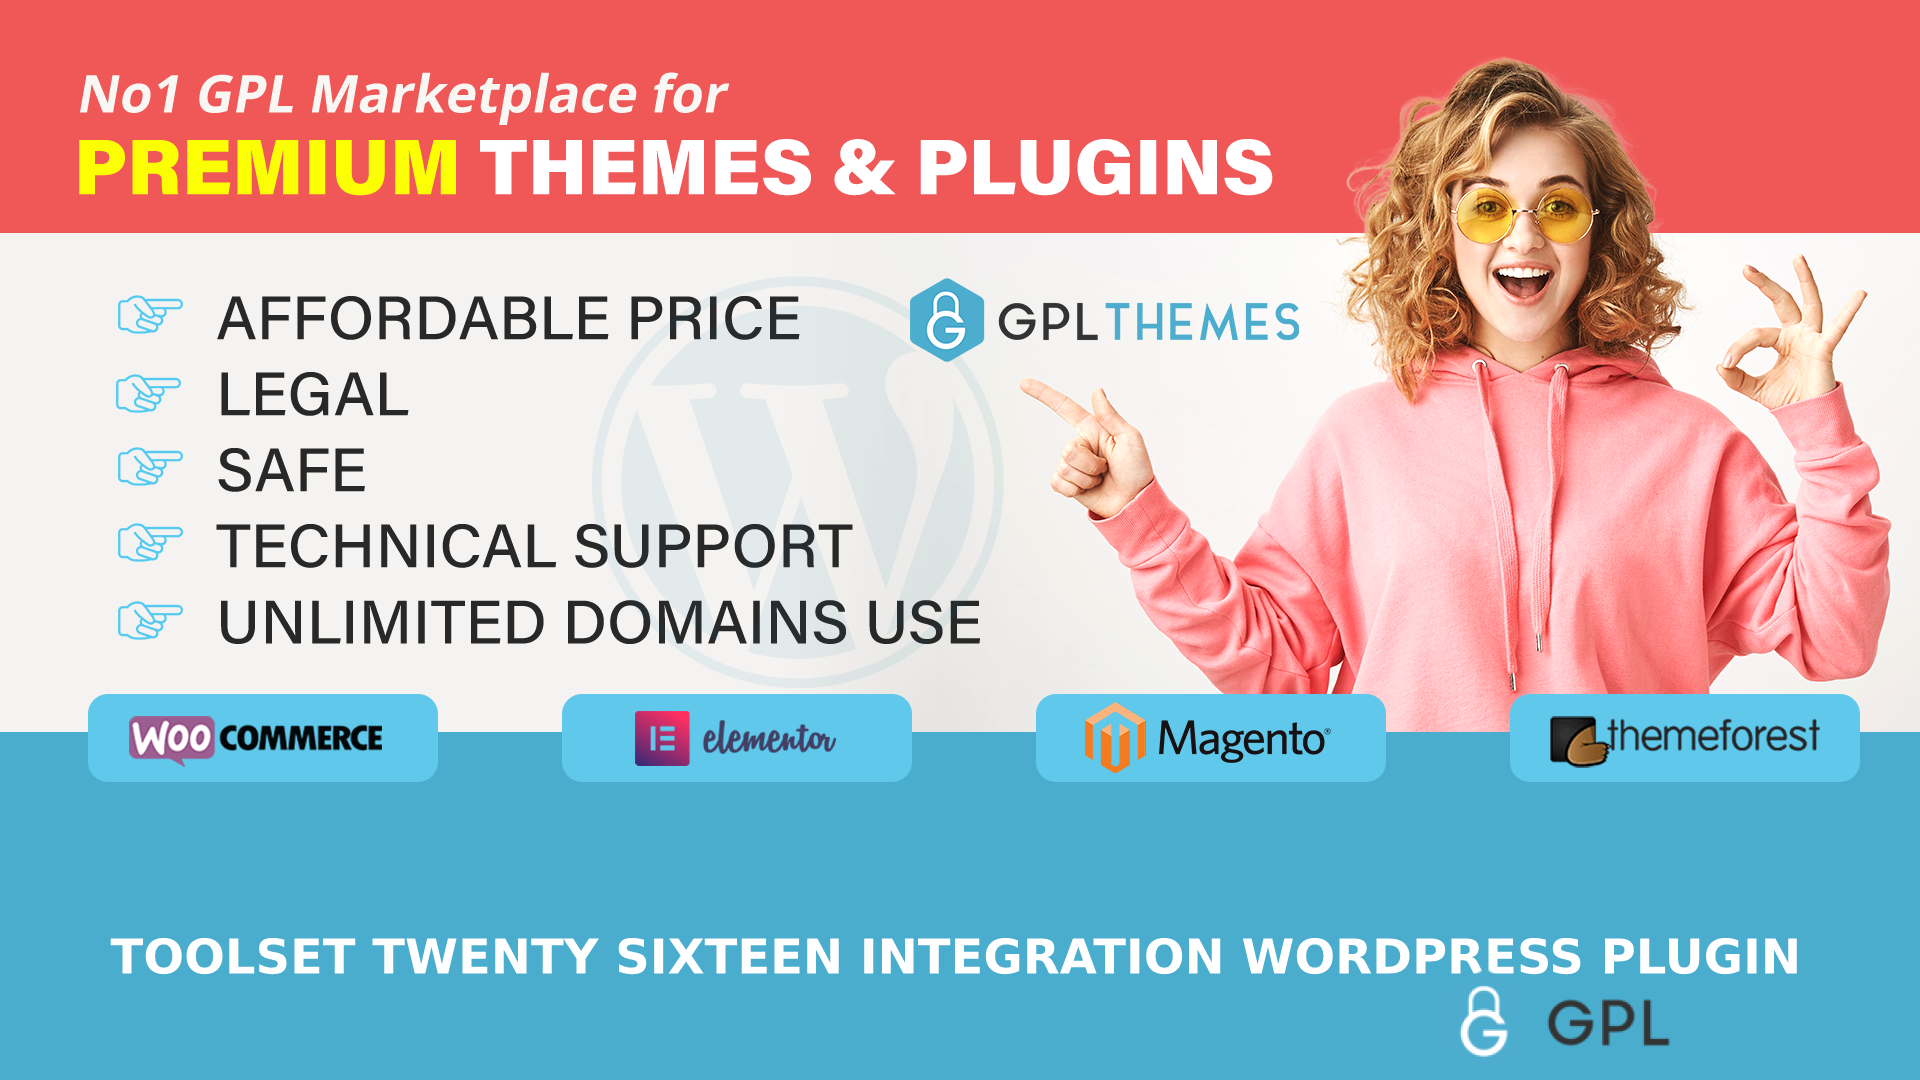 Toolset Twenty Sixteen Integration WordPress Plugin